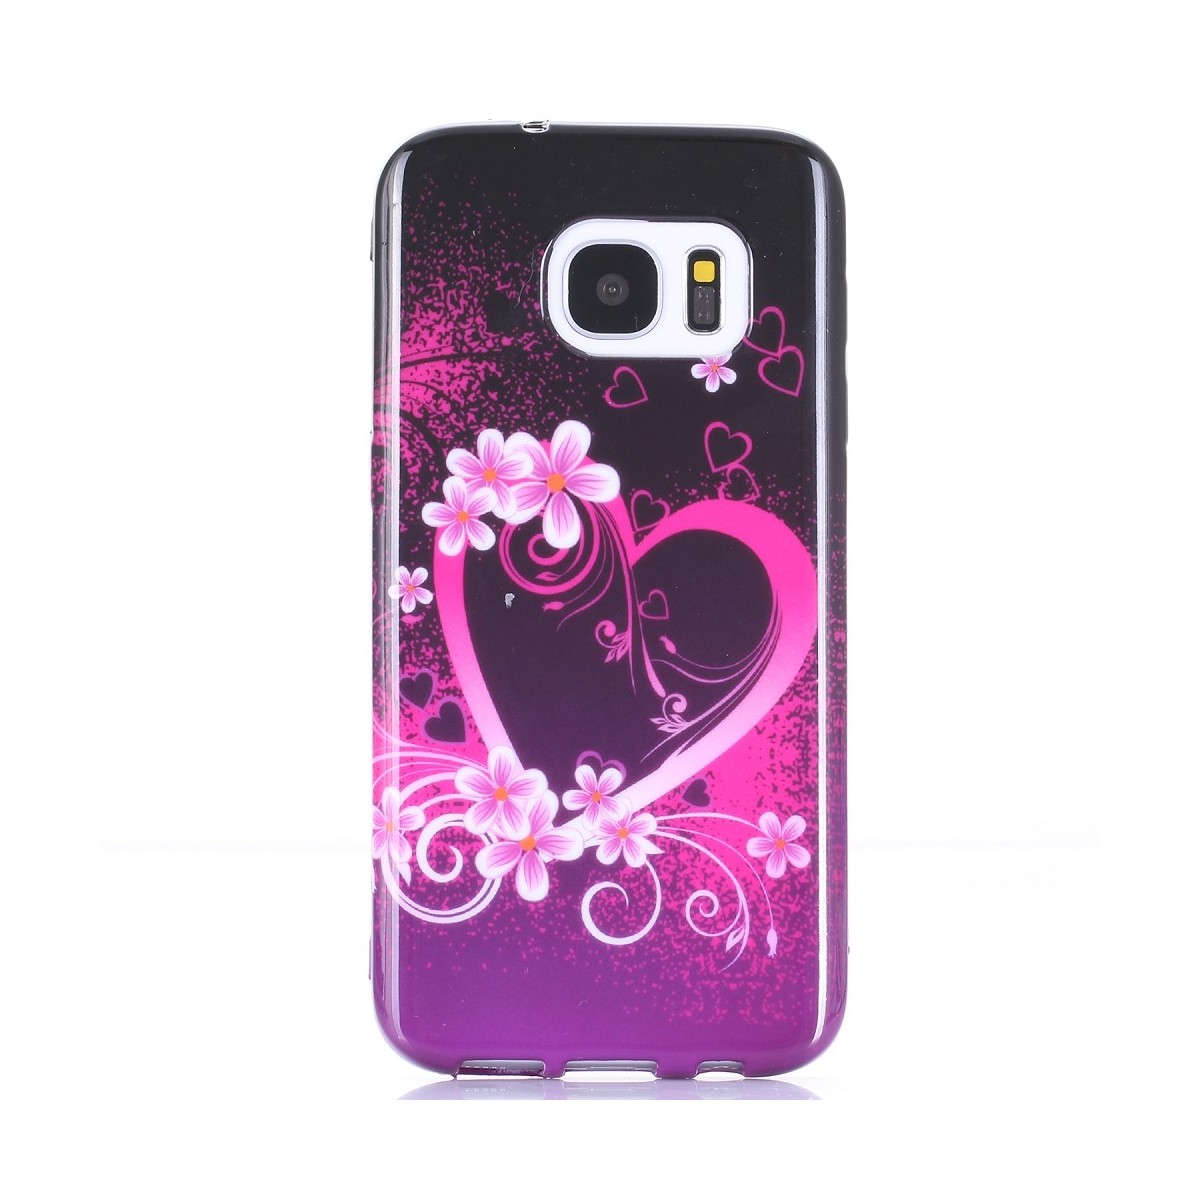 Coque Galaxy S7 motif Coeur et fleurs - Crazy Kase